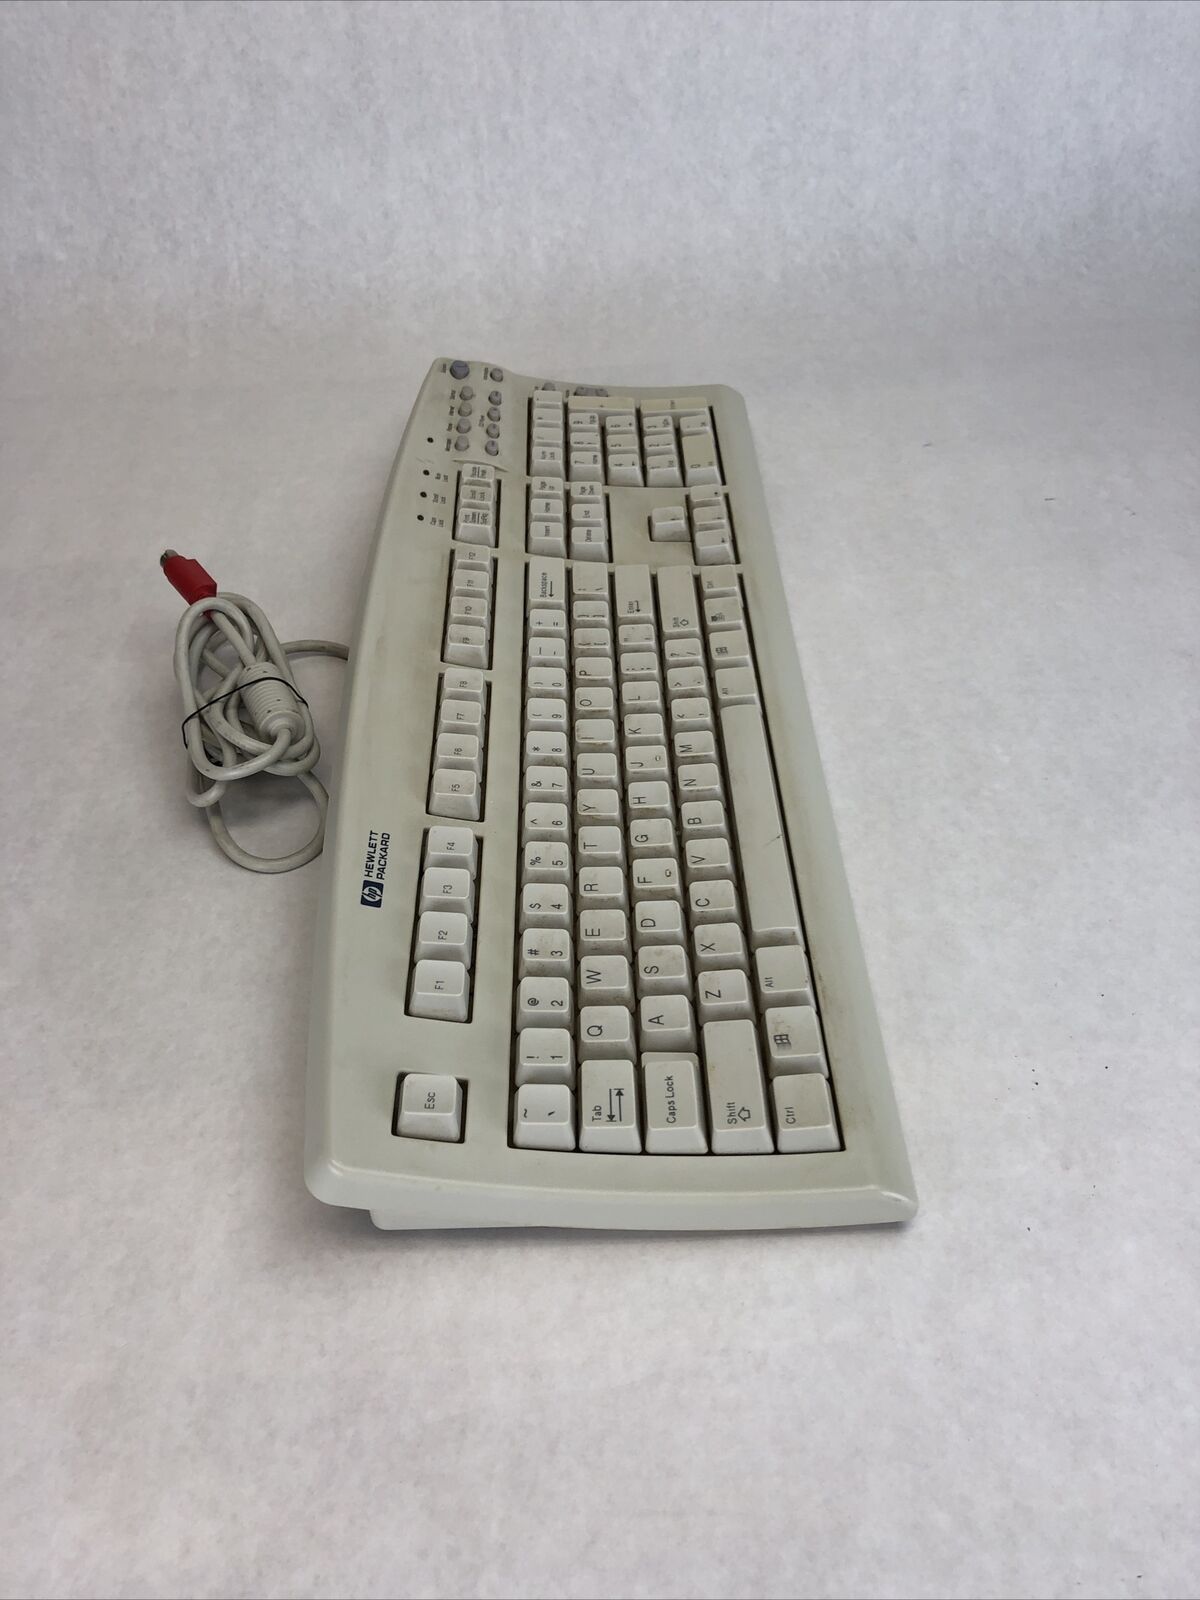 Hewlett Packard HP SK-2501 PS/2 Wired Vintage Keyboard C4734-60501